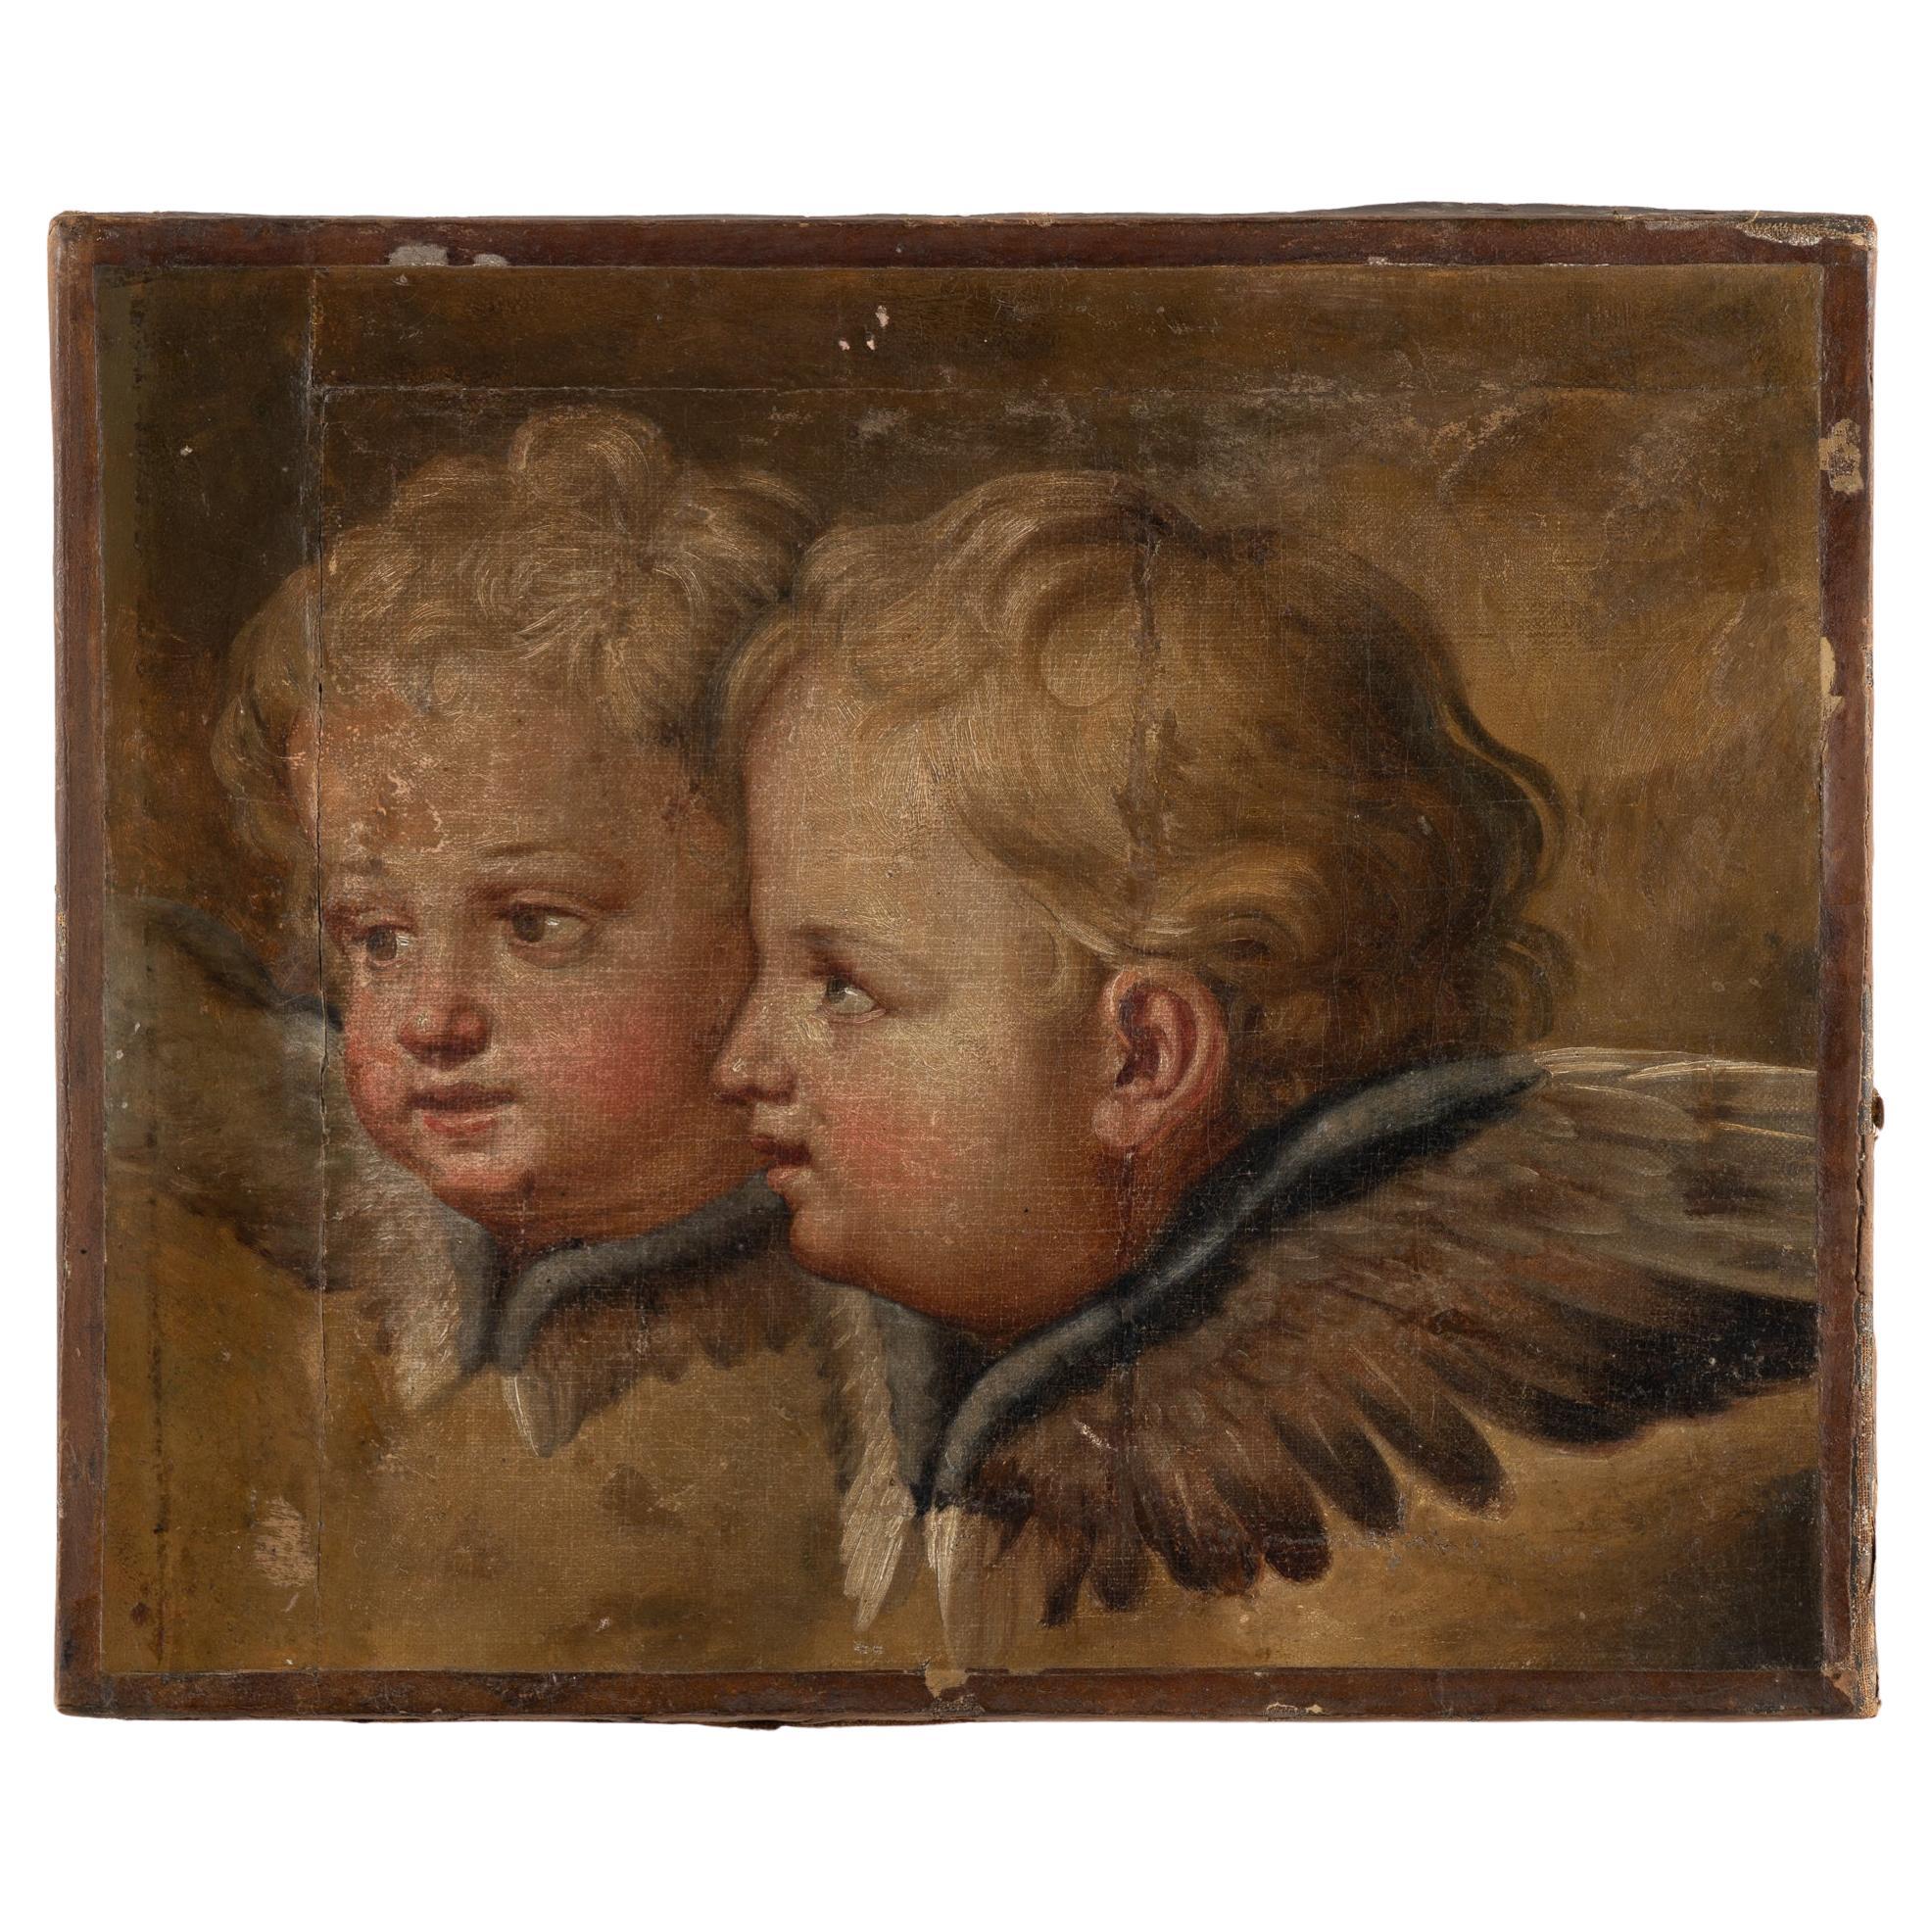 Original Oil on Canvas Painting of Two Putti Cherubs, Denmark circa 1840-60